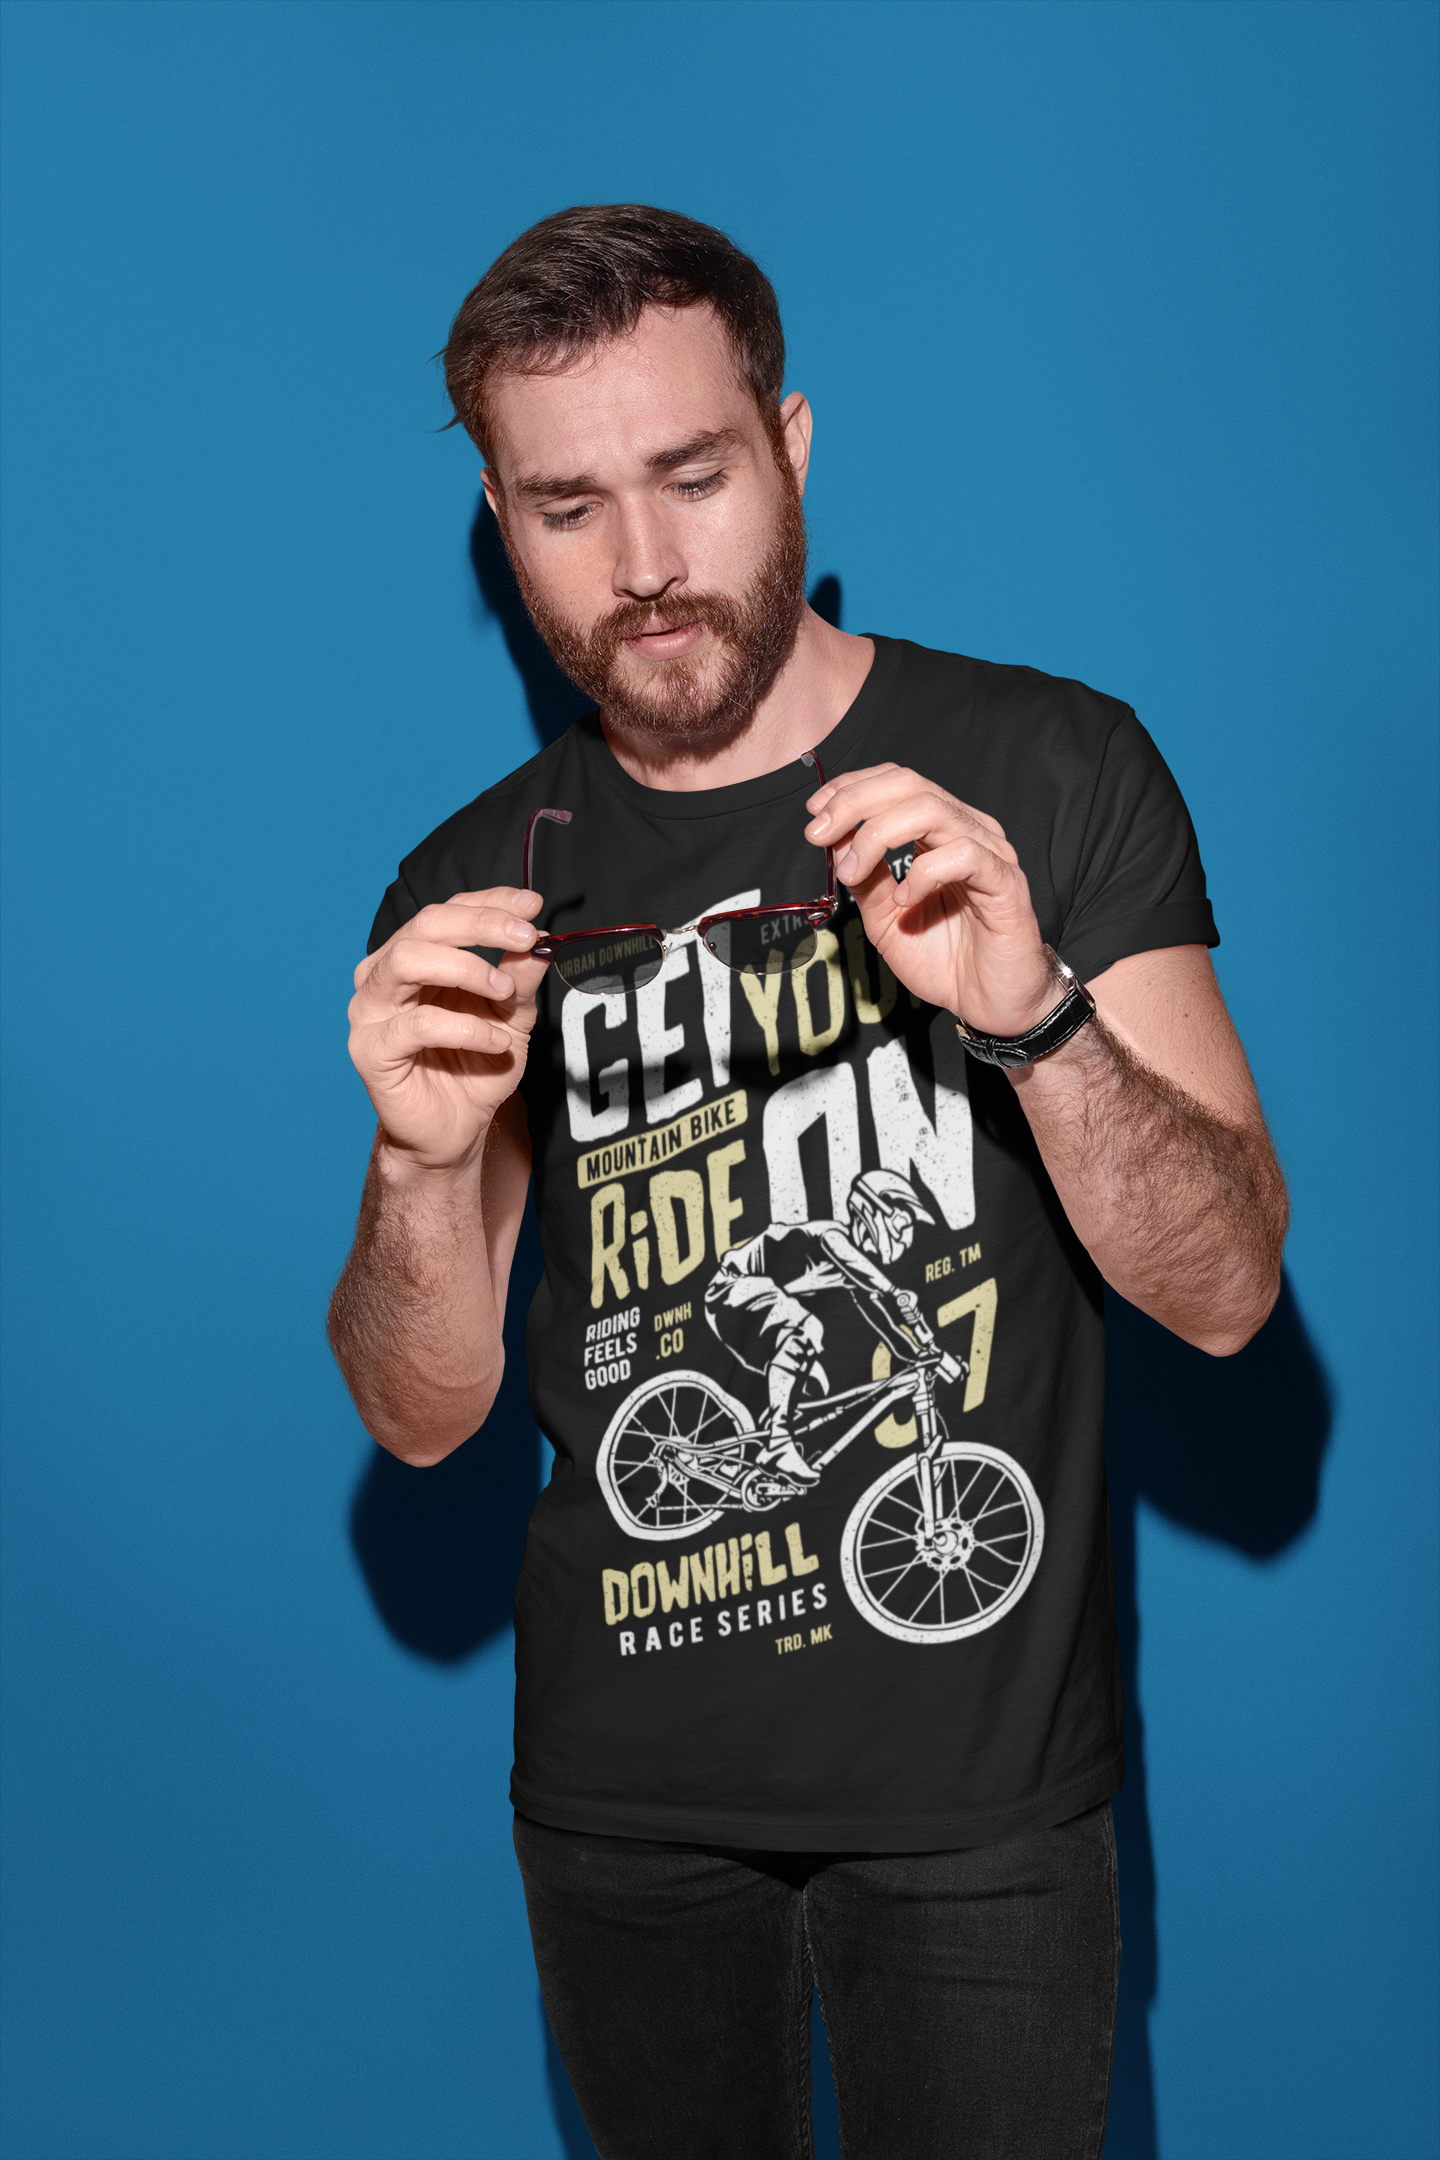 ULTRABASIC Men's Graphic T-Shirt Get Your Ride On - Mountain Racer Tee Shirt